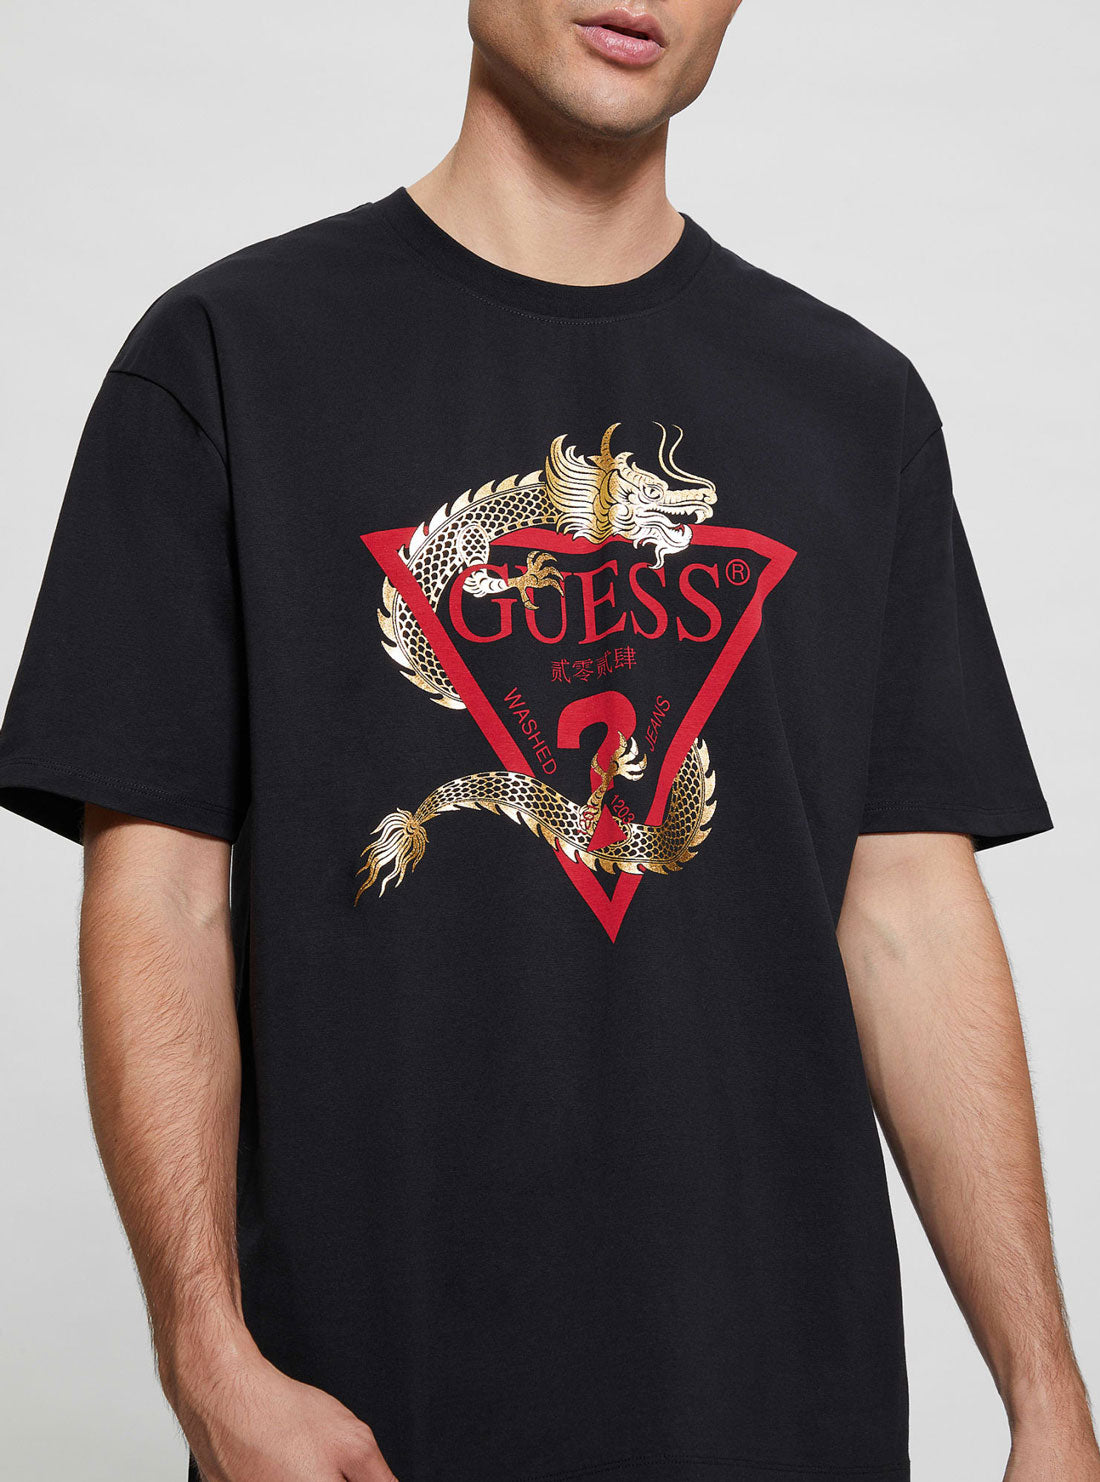 Black Dragon Triangle Logo T-Shirt | GUESS Men's Apparel | detail view